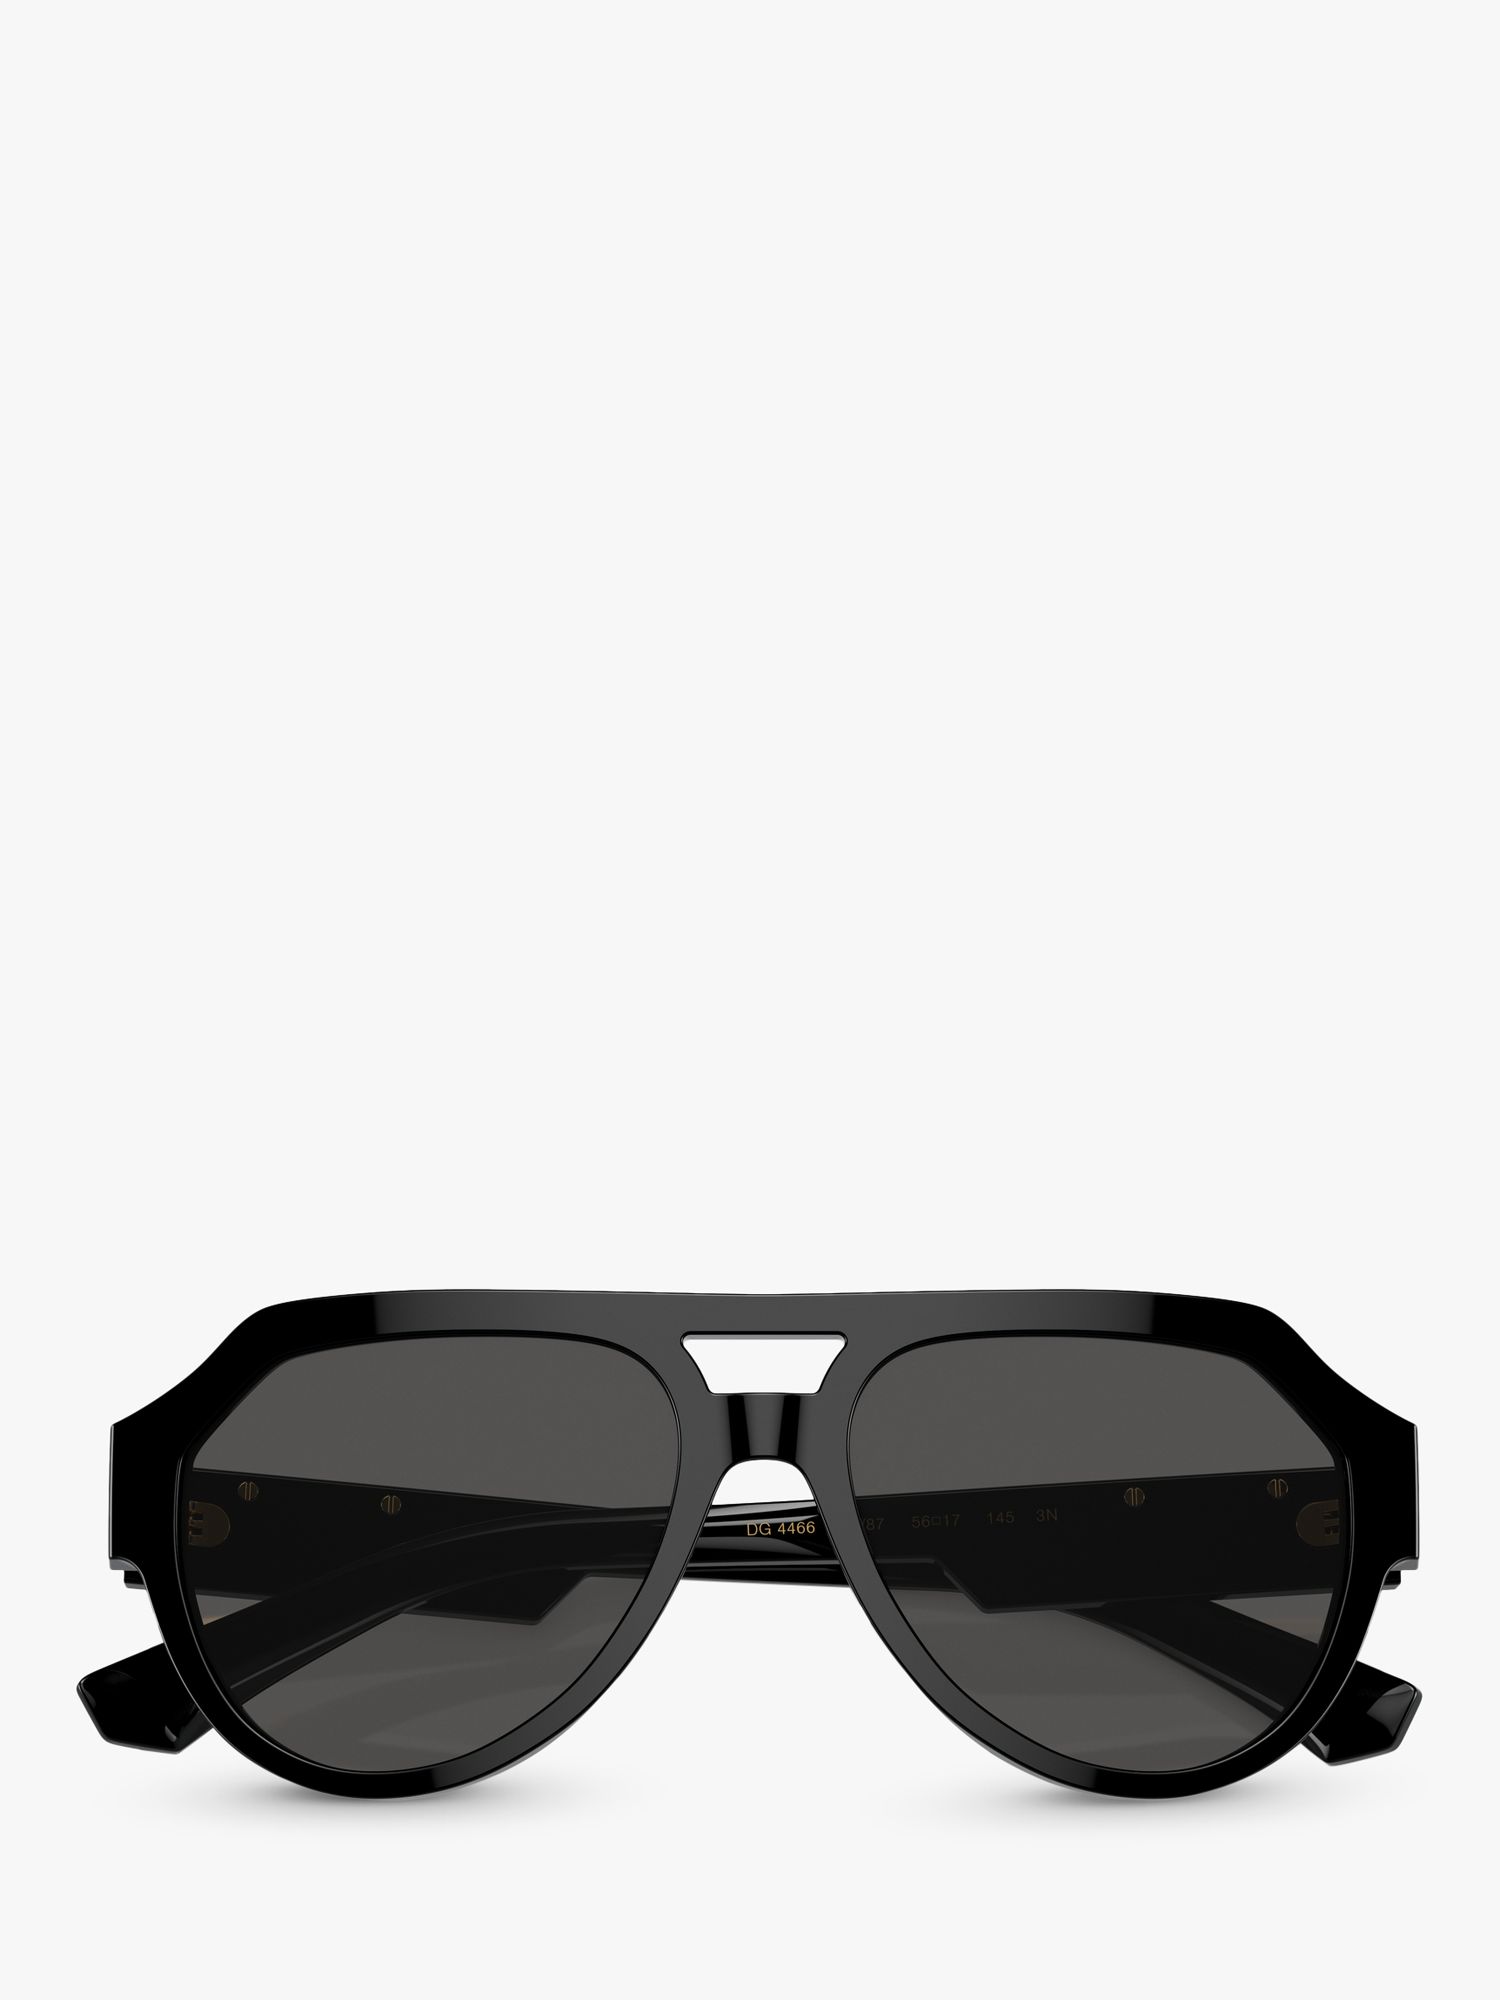 Dolce & Gabbana DG4466 Men's Aviator Sunglasses, Black/Grey